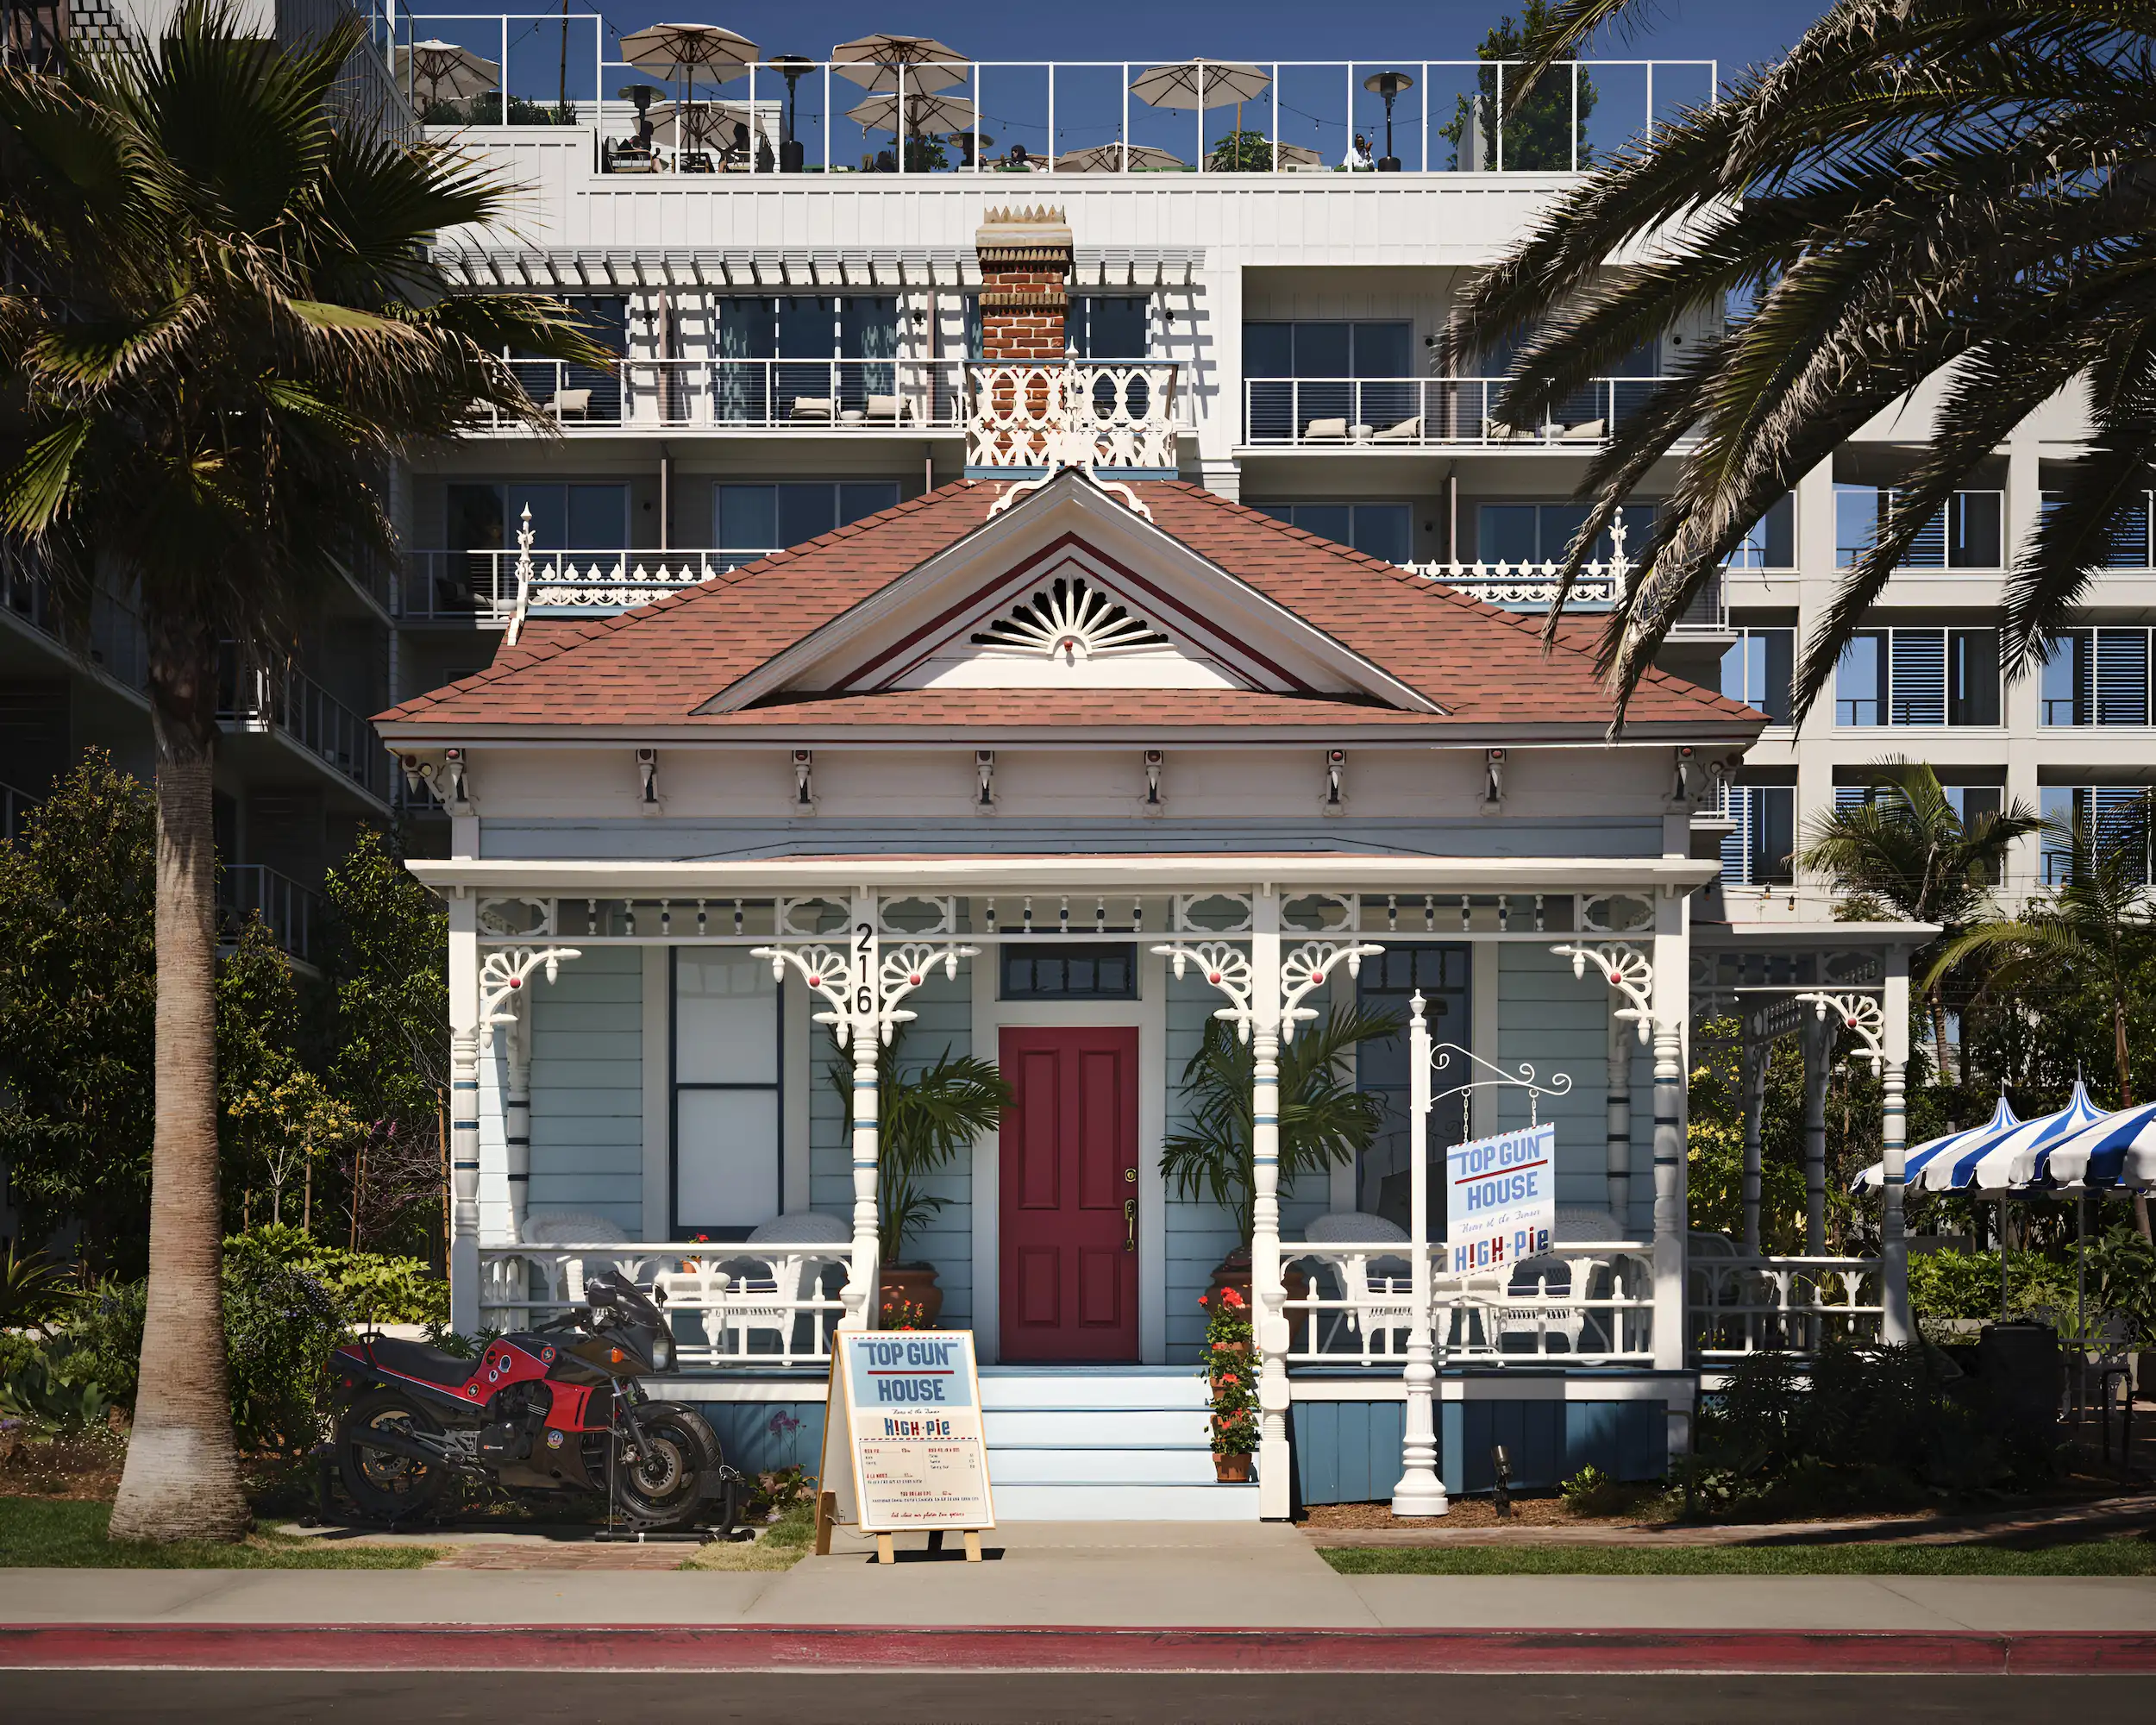 Top Gun House Facade: Where Hollywood History Meets Coastal Charm.